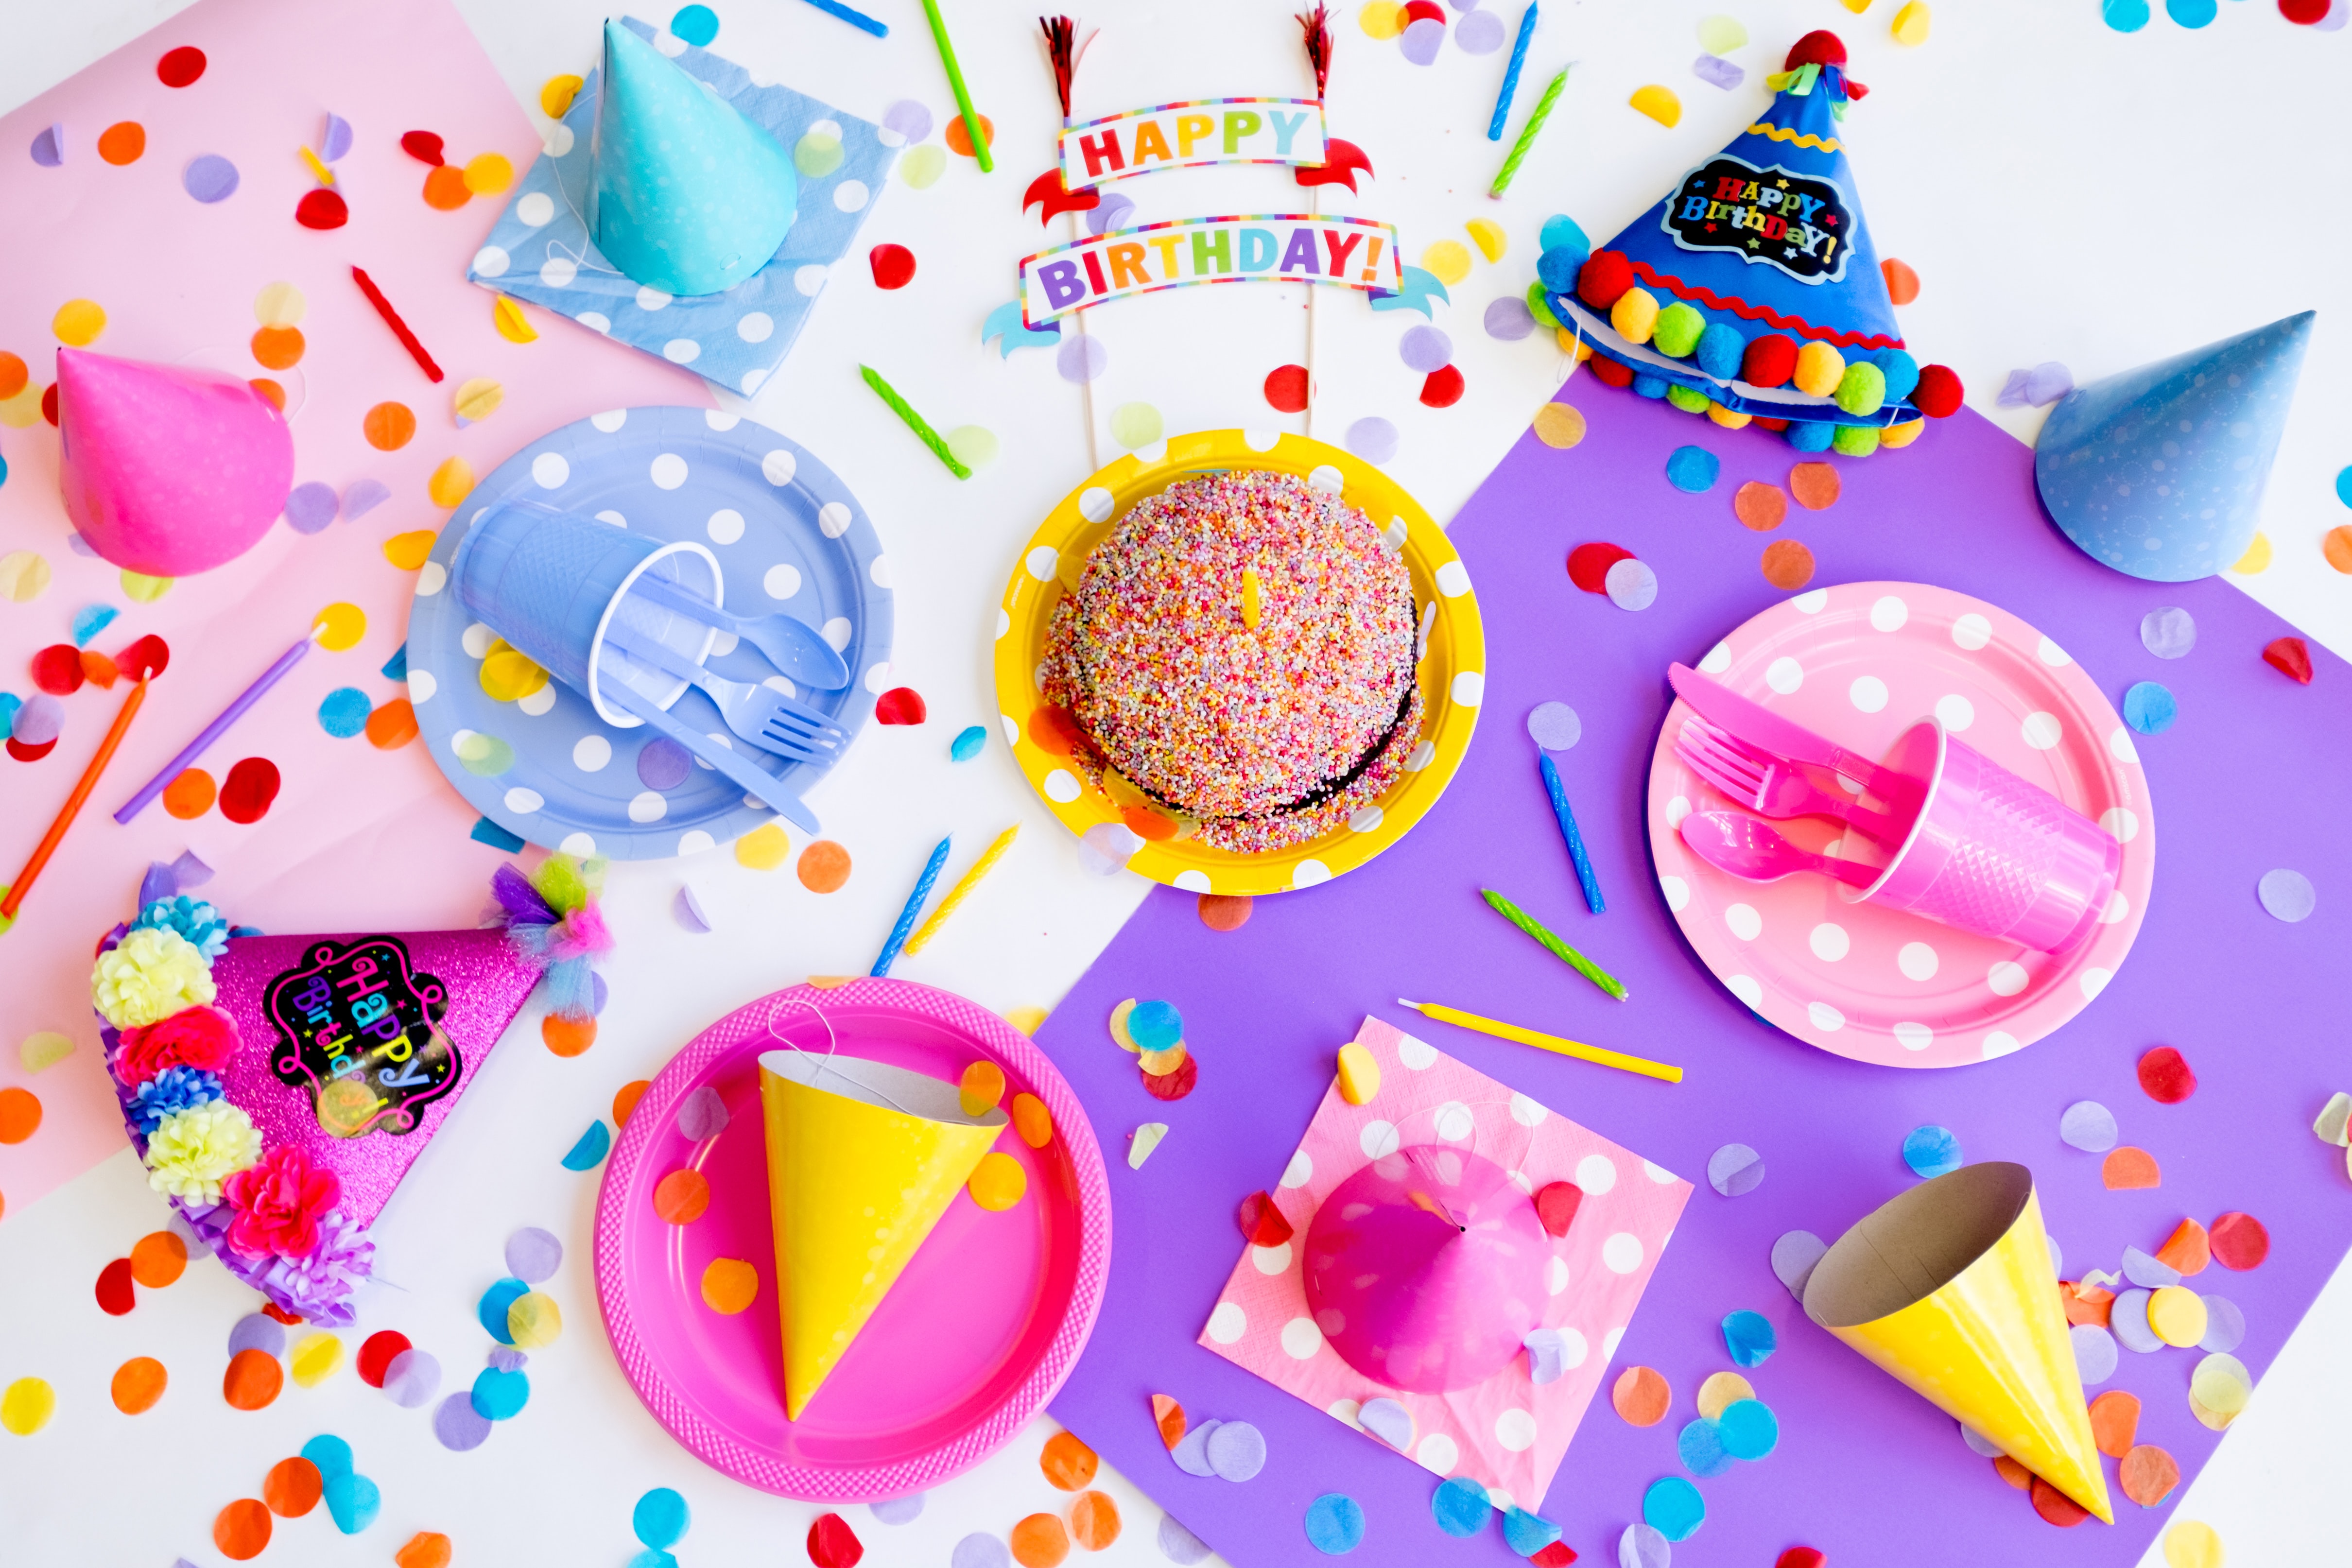 Planning a Birthday Party: Birthday Party Checklist #1